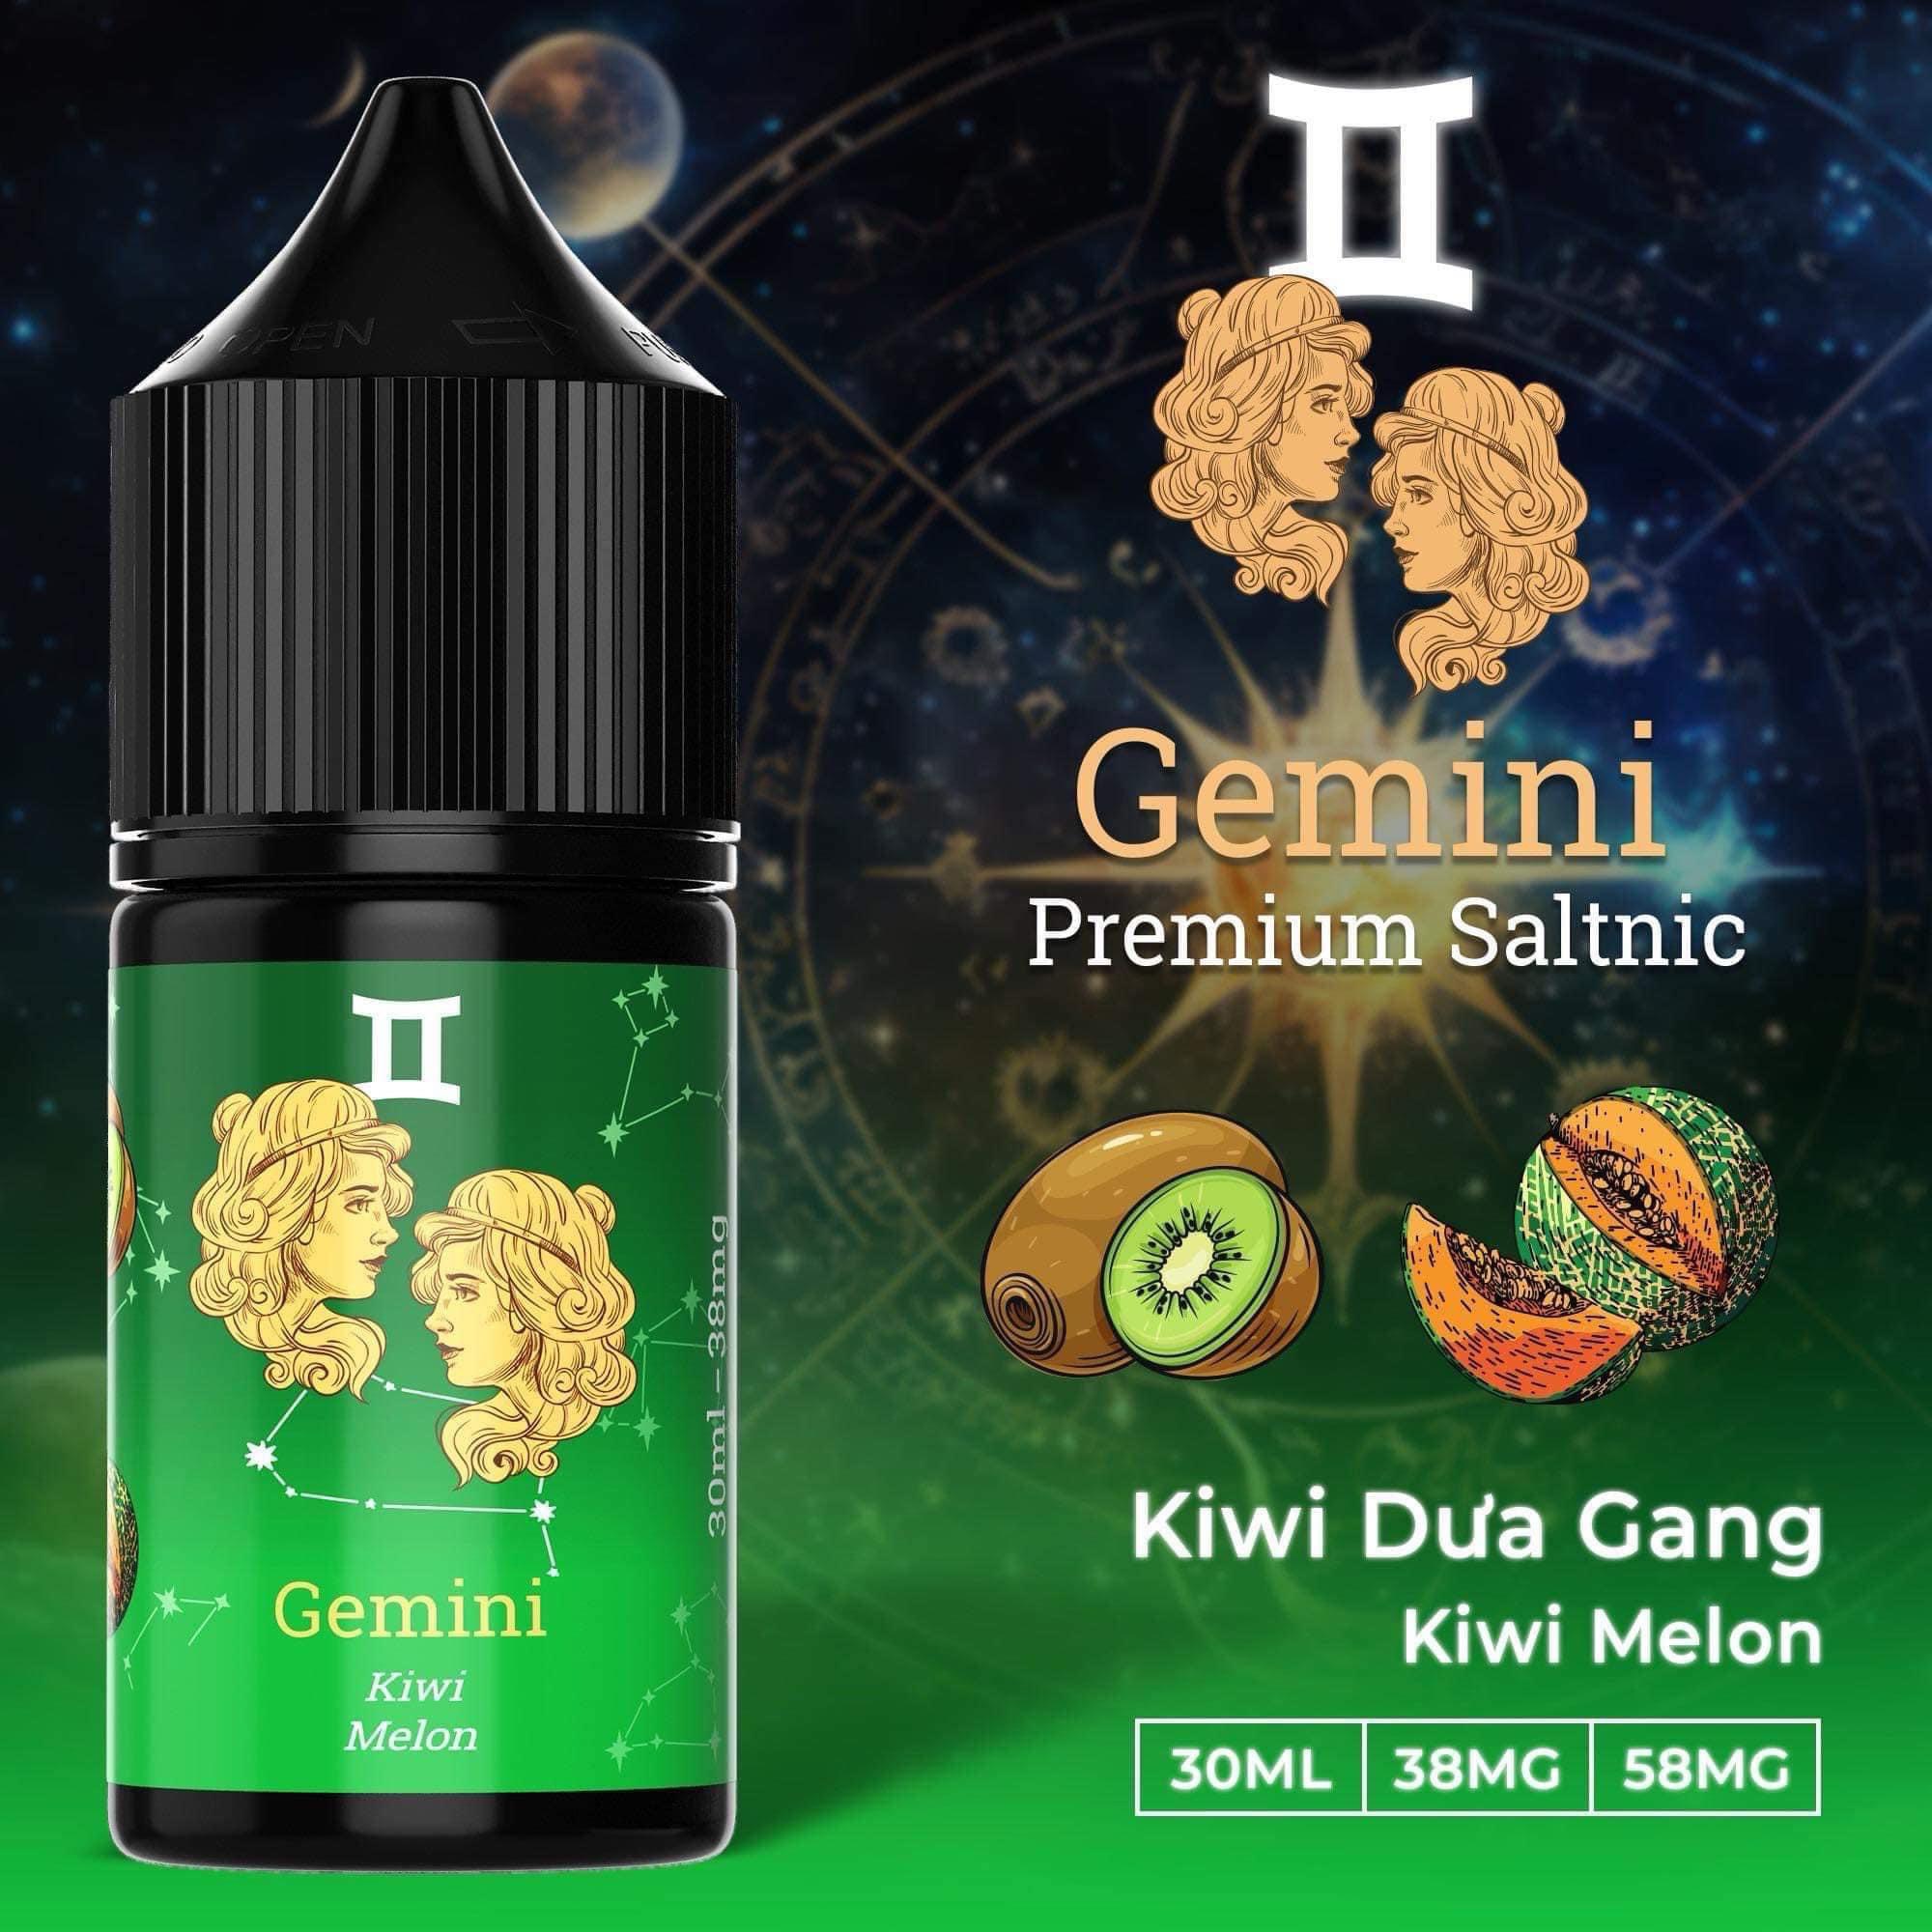 Juice Gemini Premium saltnic 38mg-58mg